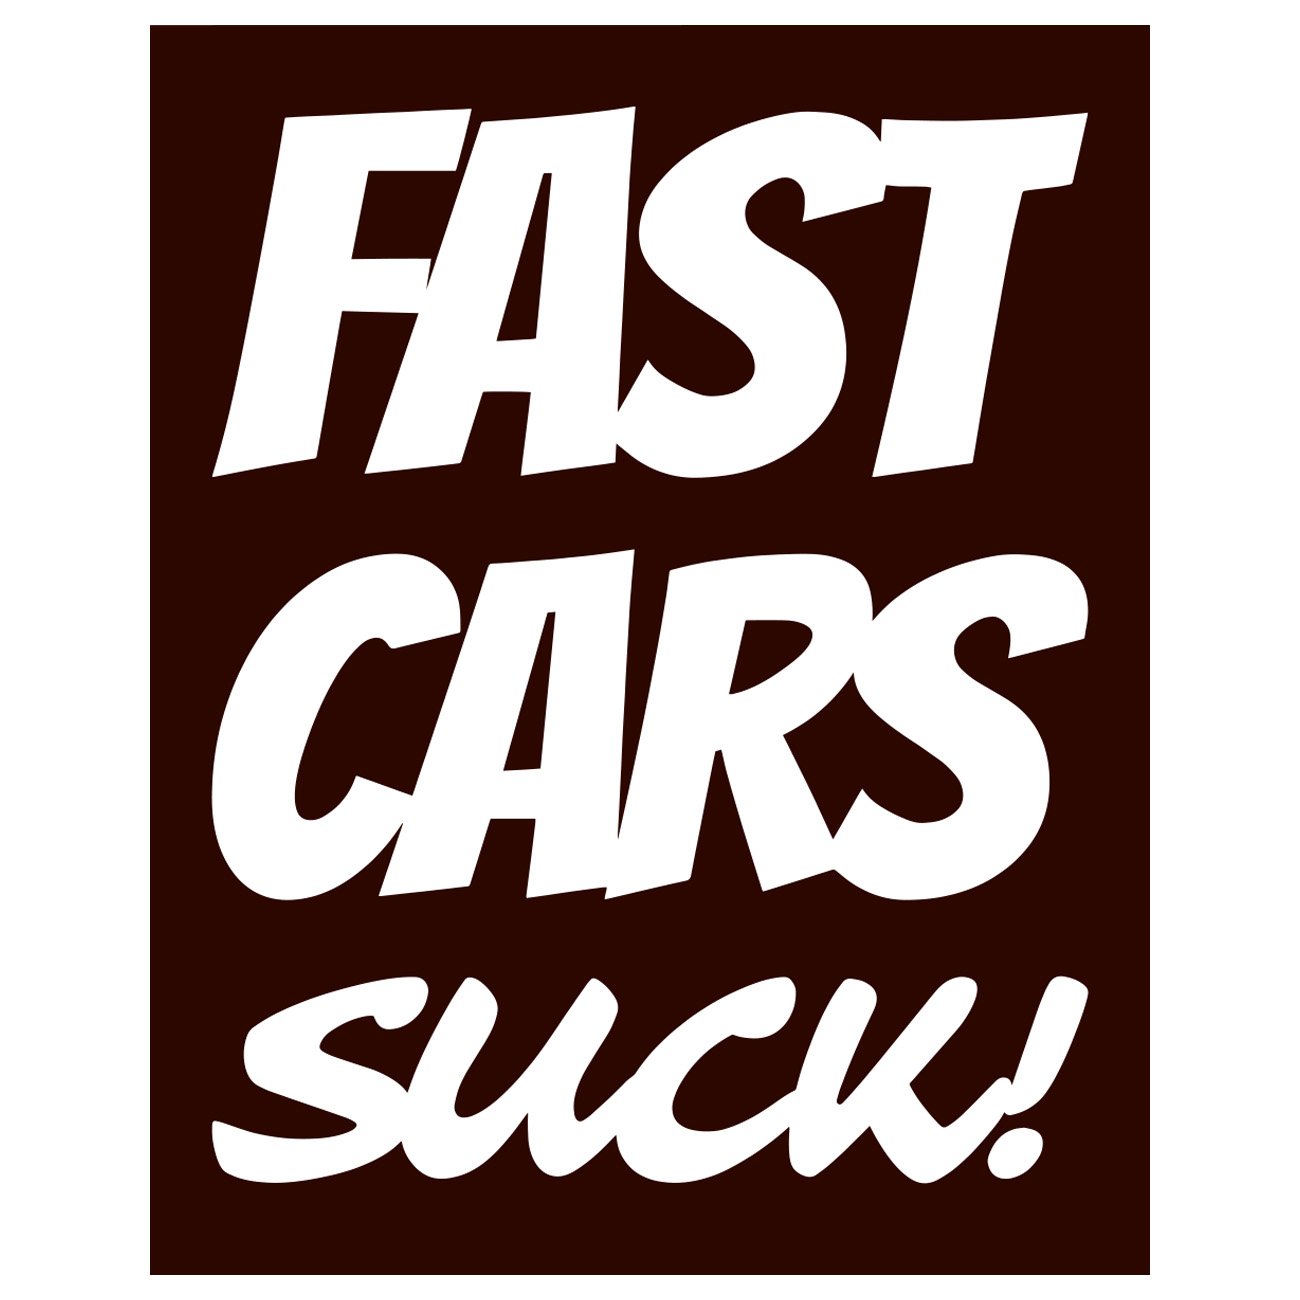 Fast cars suck